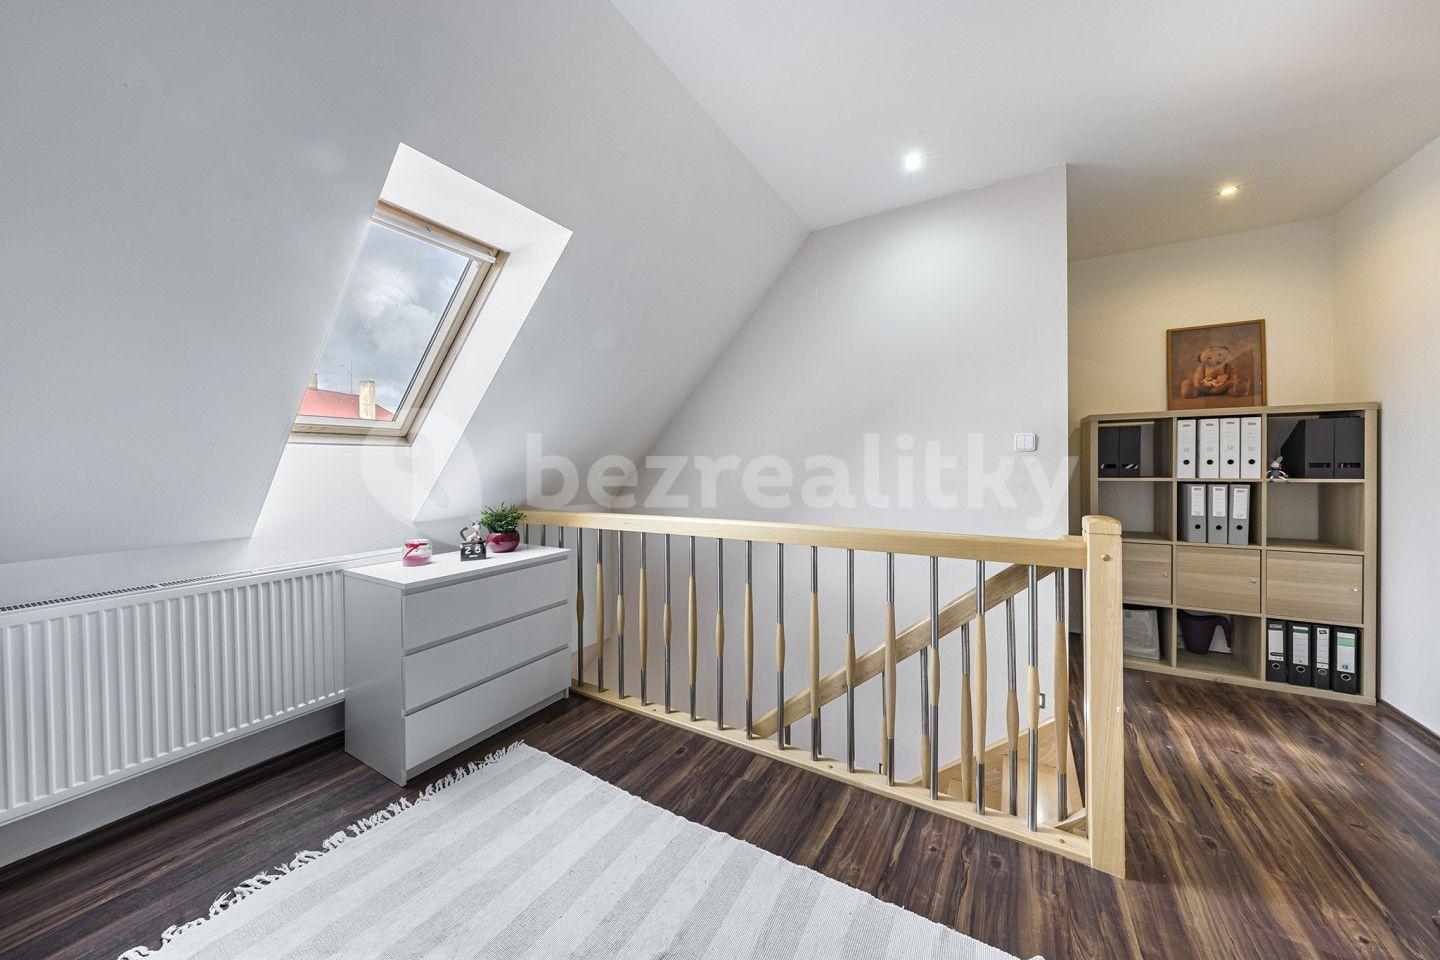 4 bedroom flat for sale, 144 m², U stadionu, Meziboří, Ústecký Region